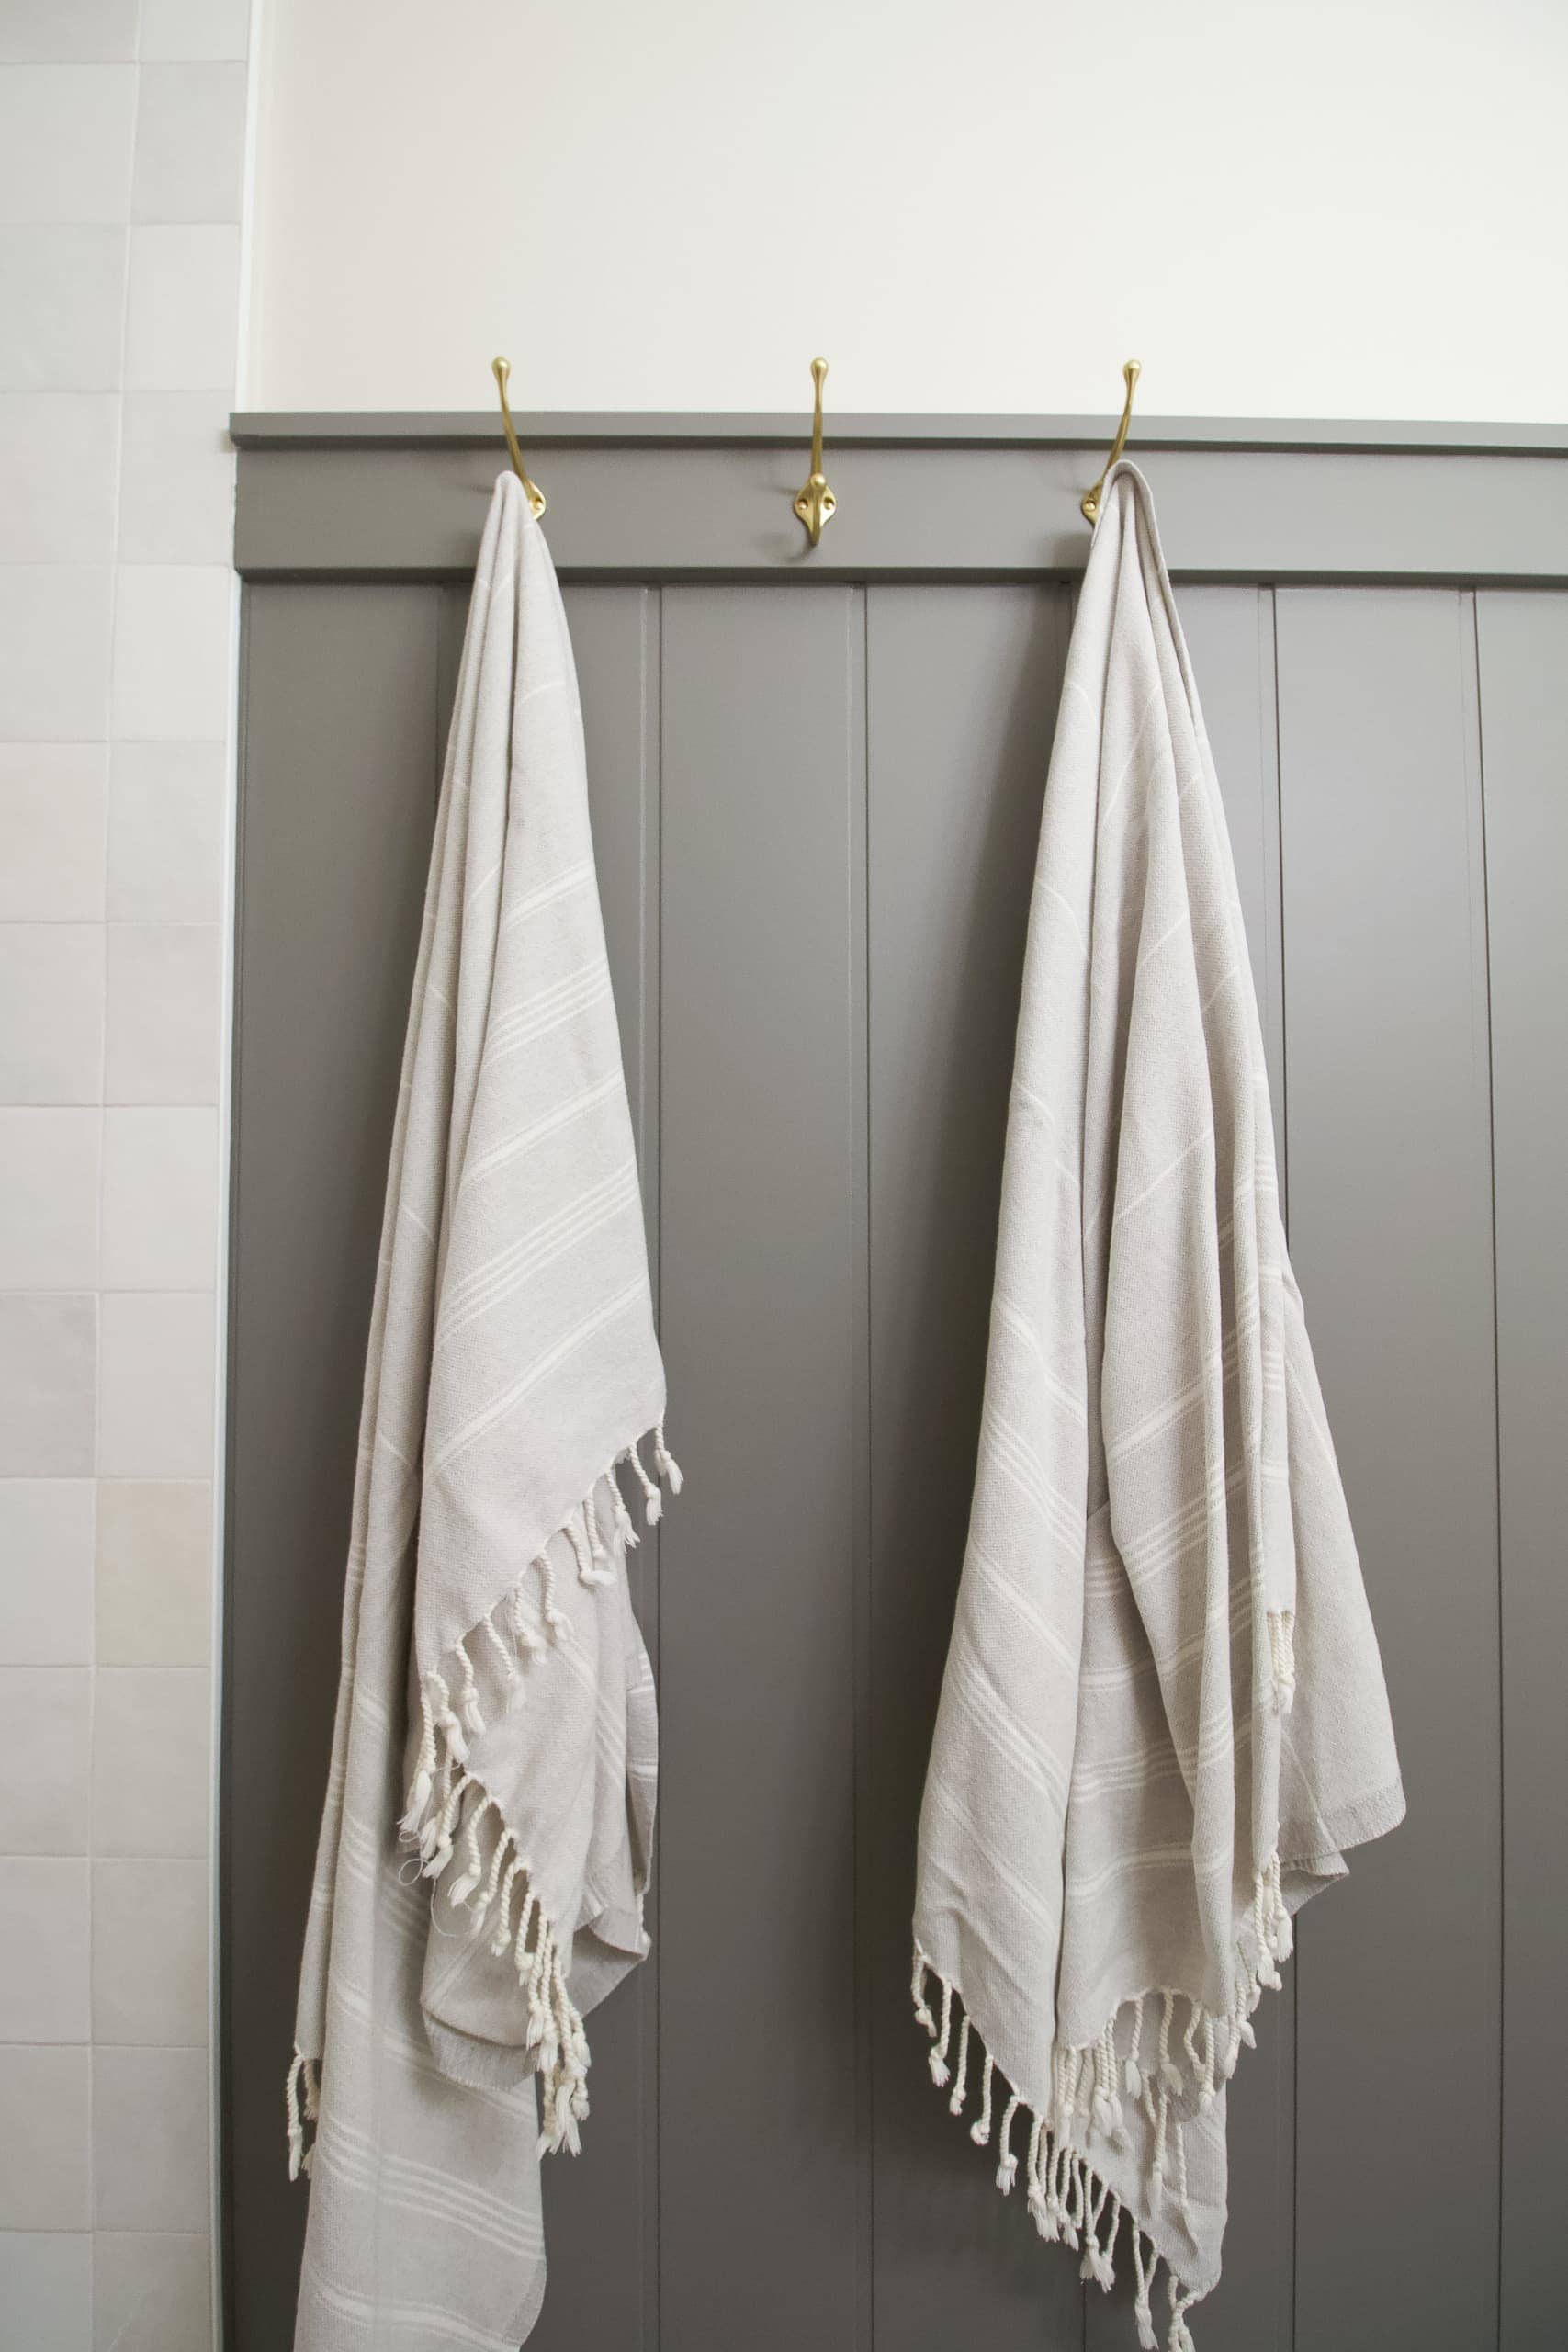 Turkish towels on hooks in a bathroom